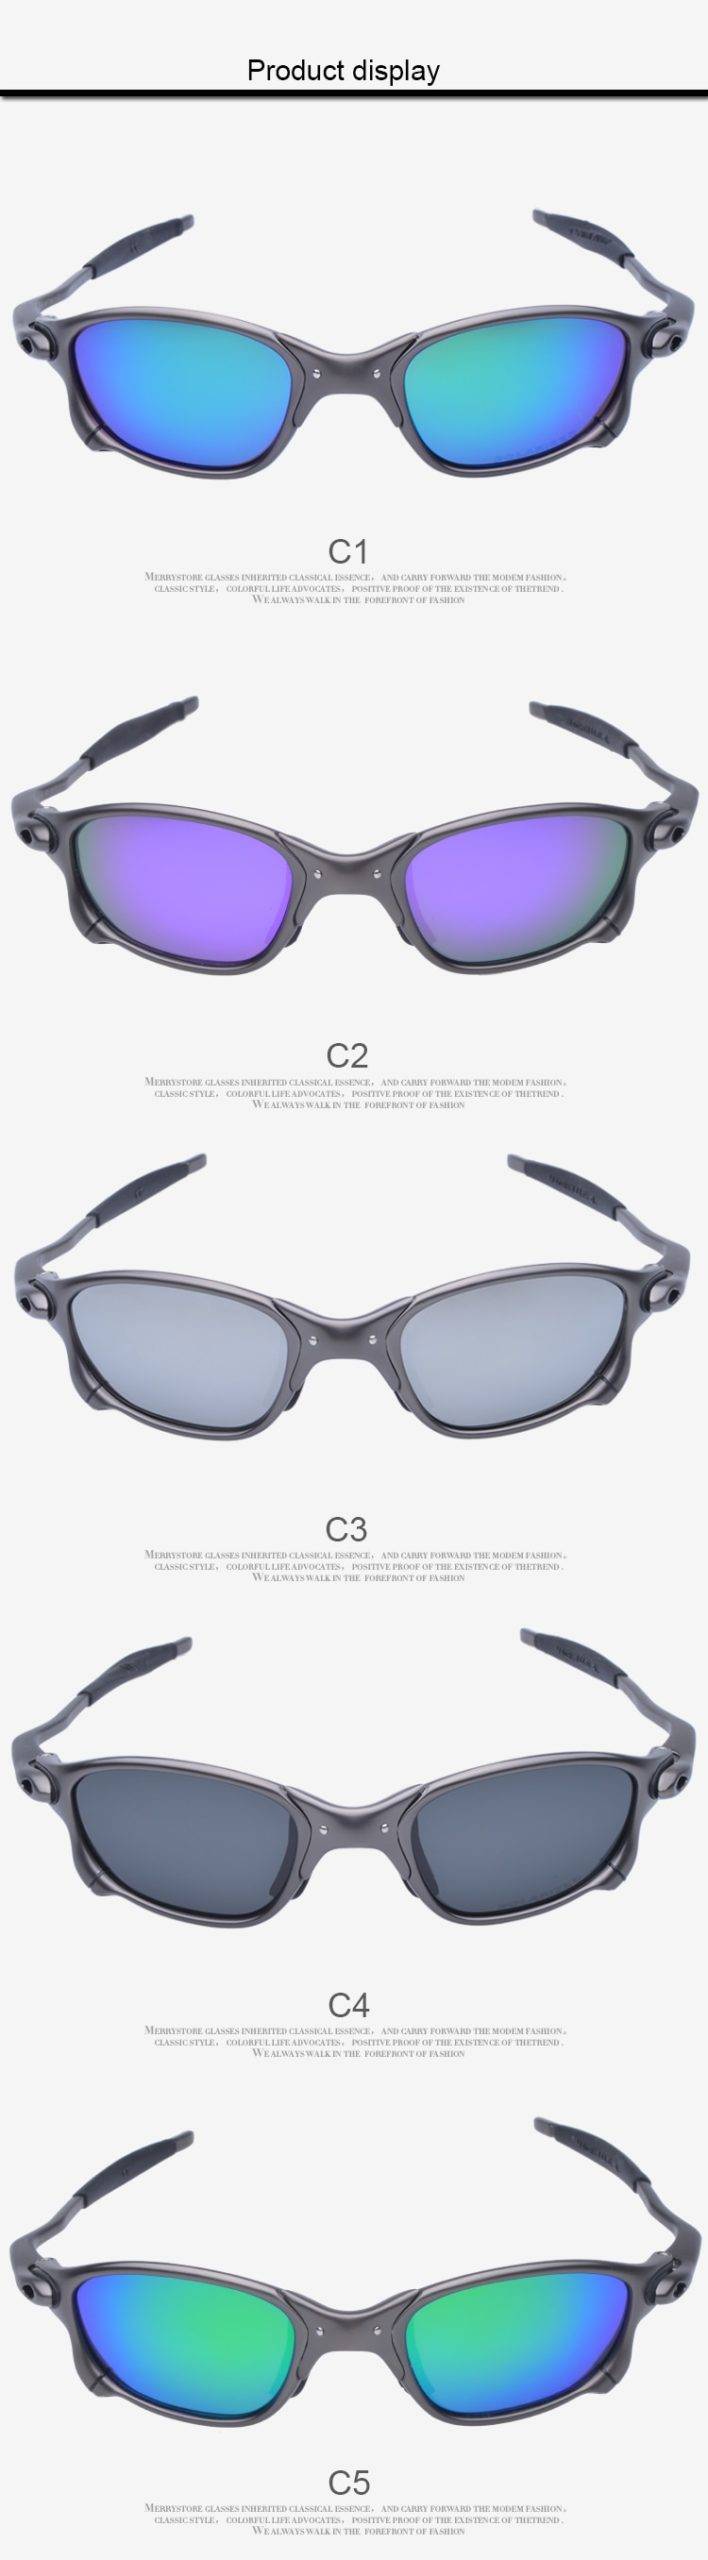 Techwear Sports Riding Cycling Sunglasses Metal Frame Polarized Cycling Glasses Men8217s Sunglasses UV400 Glasses Cyclin 8